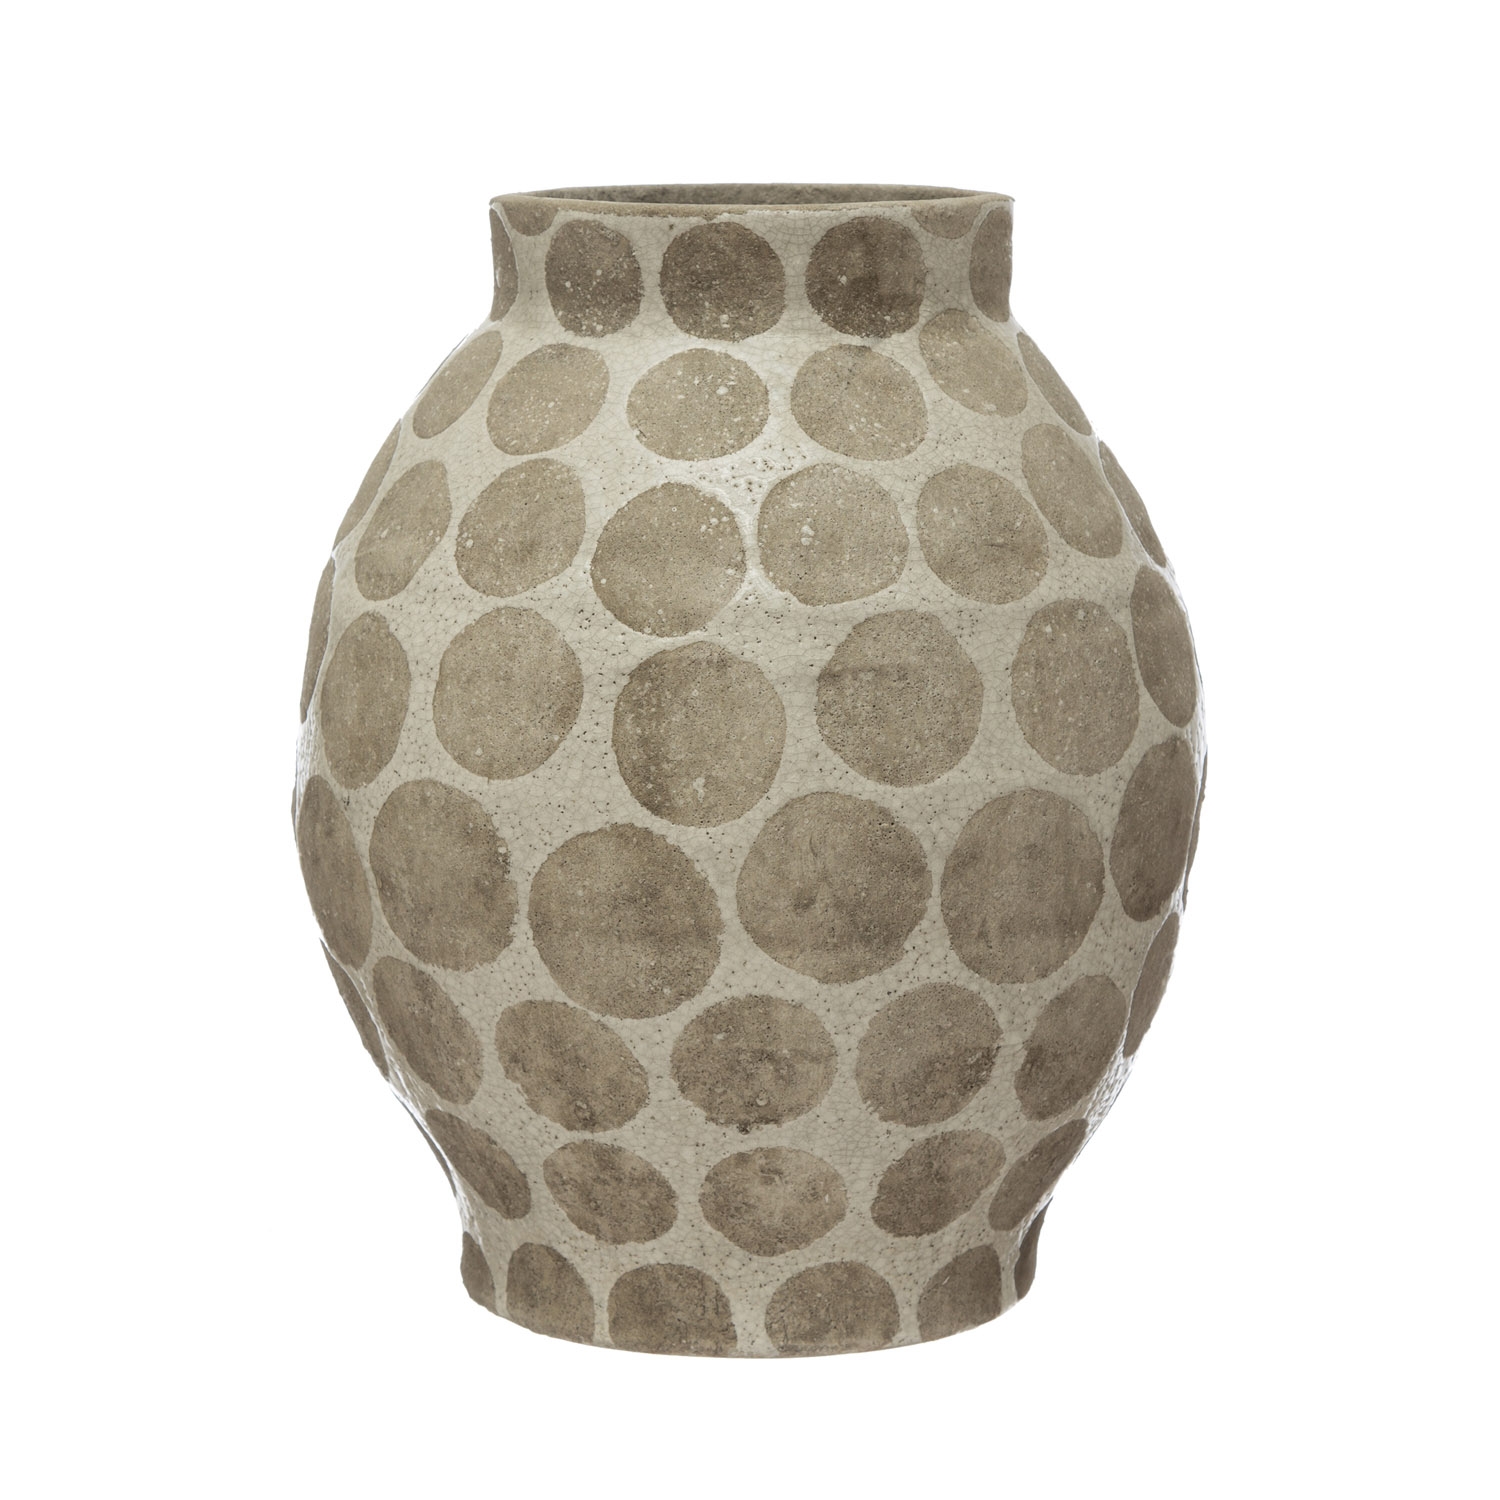 Terra-cotta Vase with Wax Relief Dots - Image 0